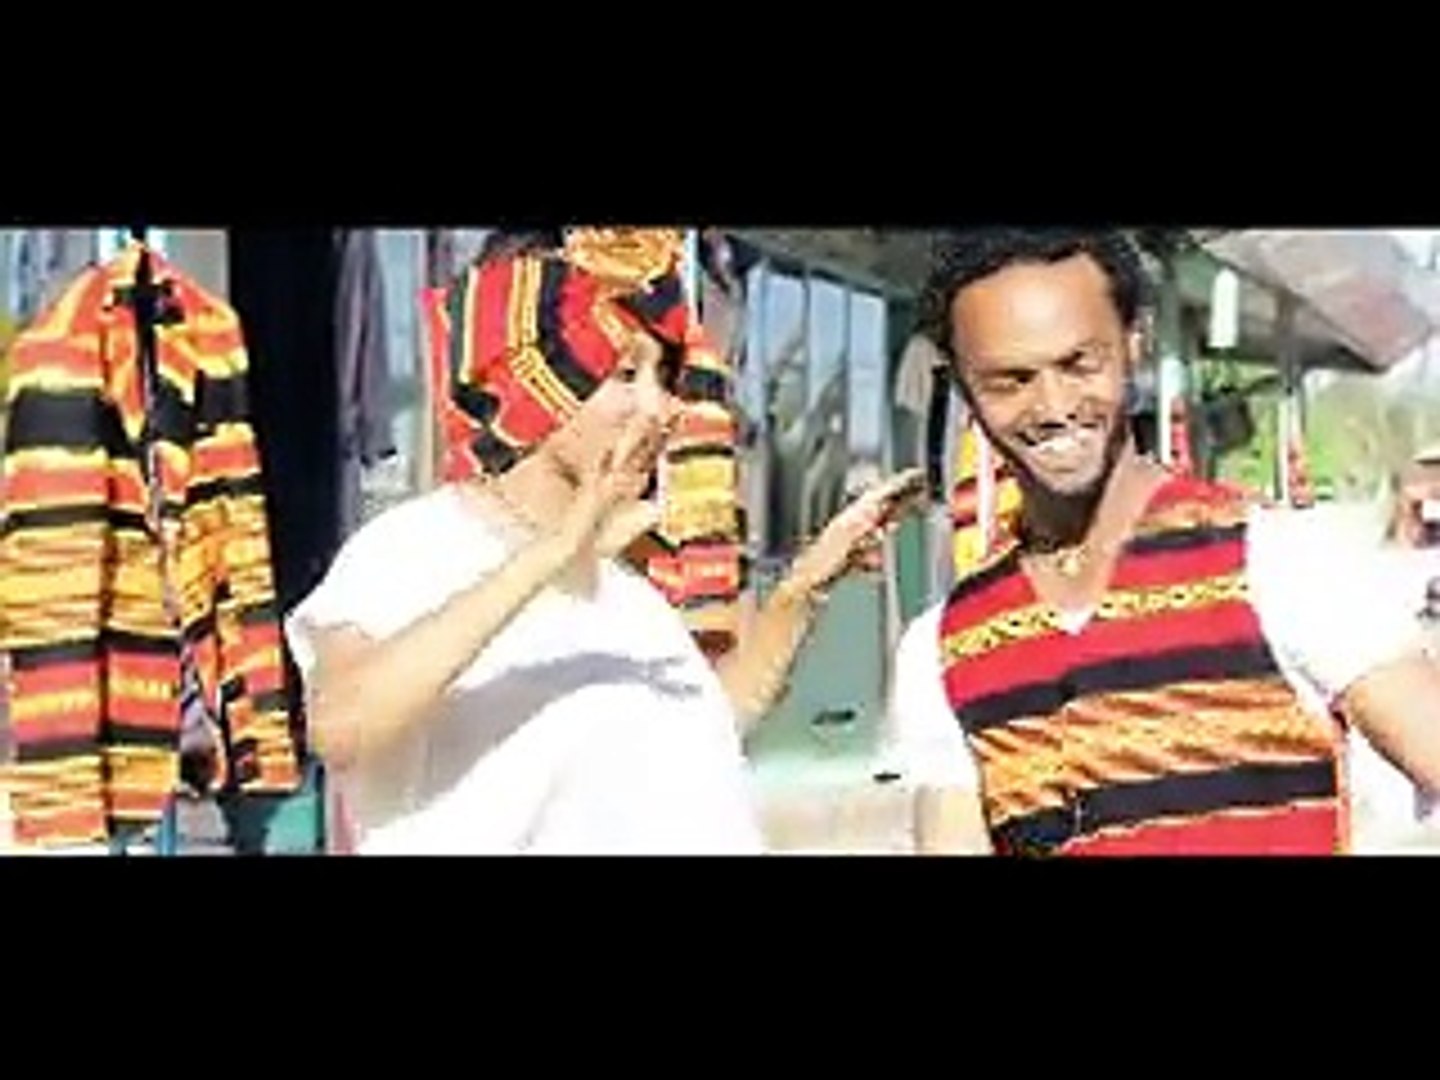 Zekarias Asamrew and Chernet G/michael - (Official Music Video) New Ethiopian Music 2015